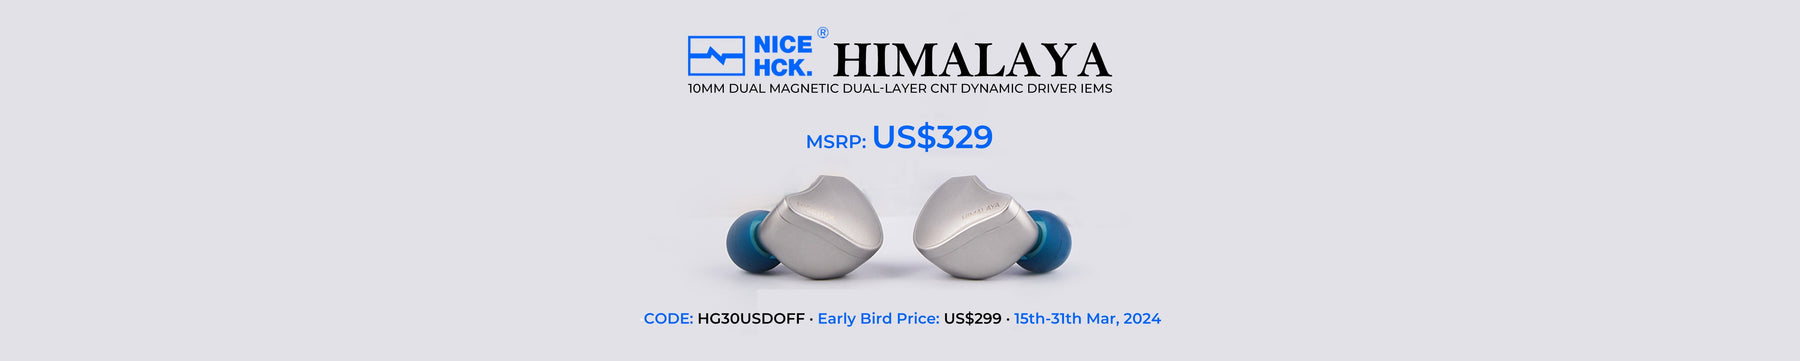 NiceHCK Himalaya Aerospace-Grade Titanium Alloy 10mm Dynamic Driver IEMs